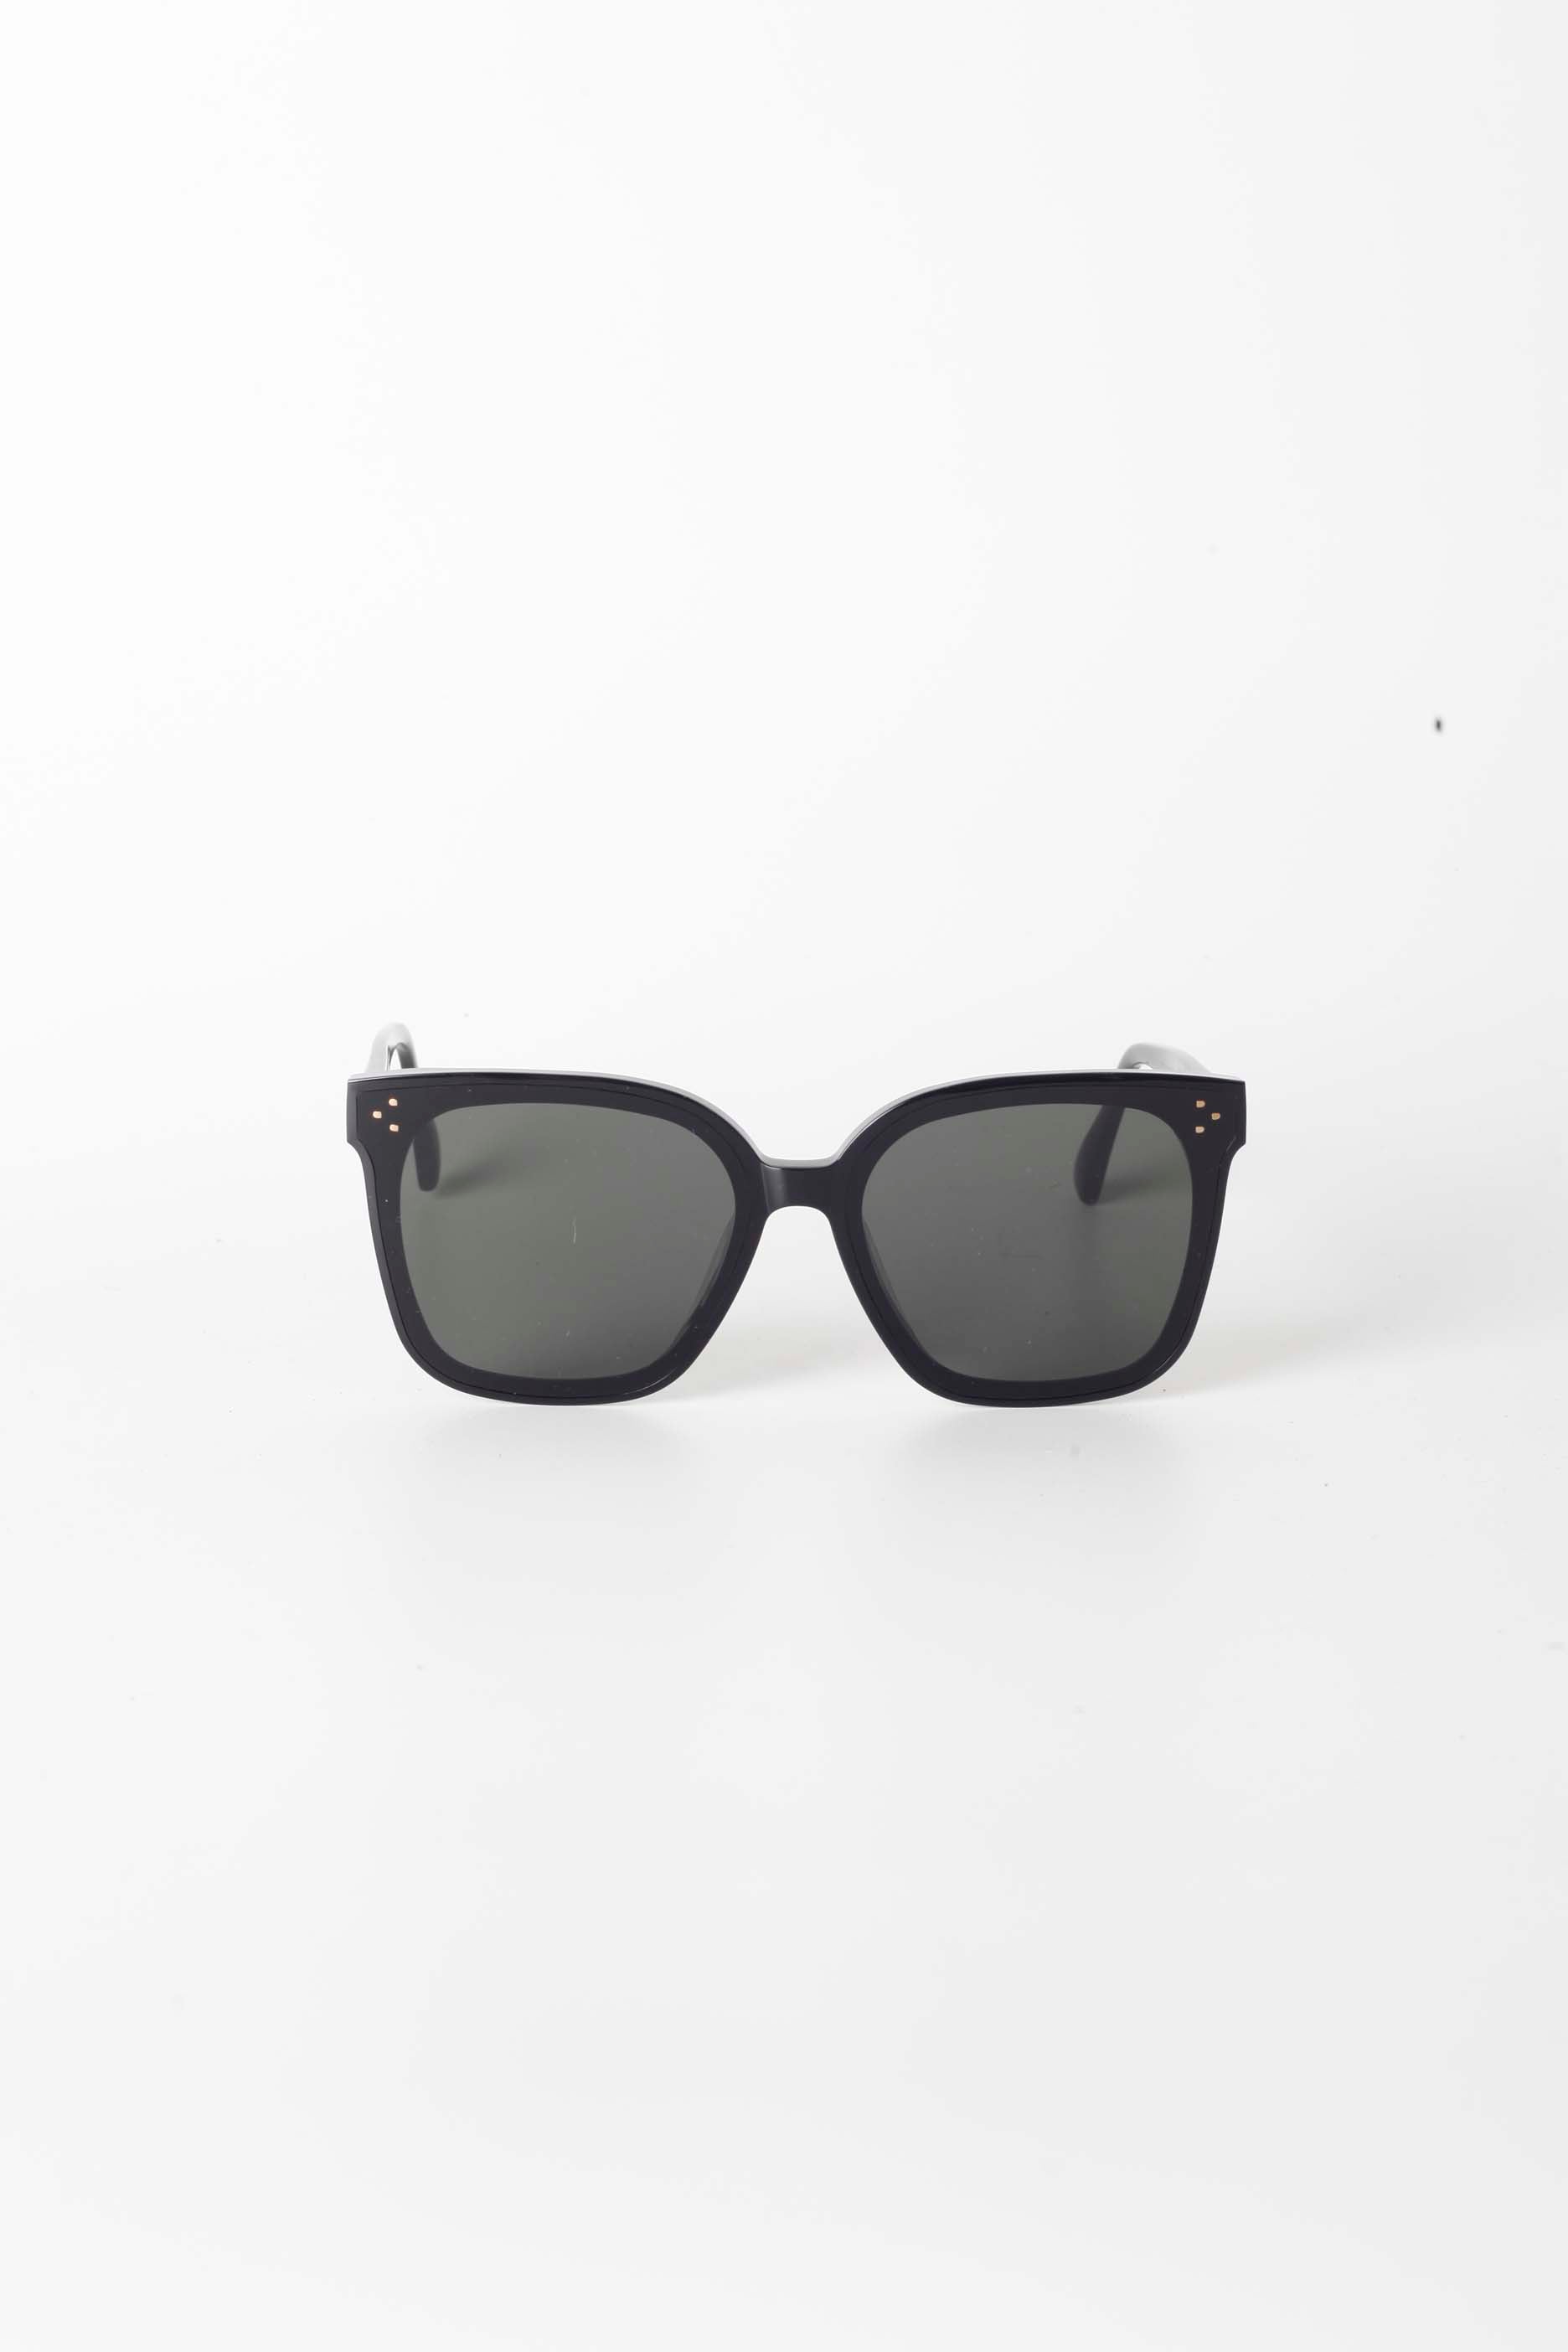 Oversized Black Square Sunglasses